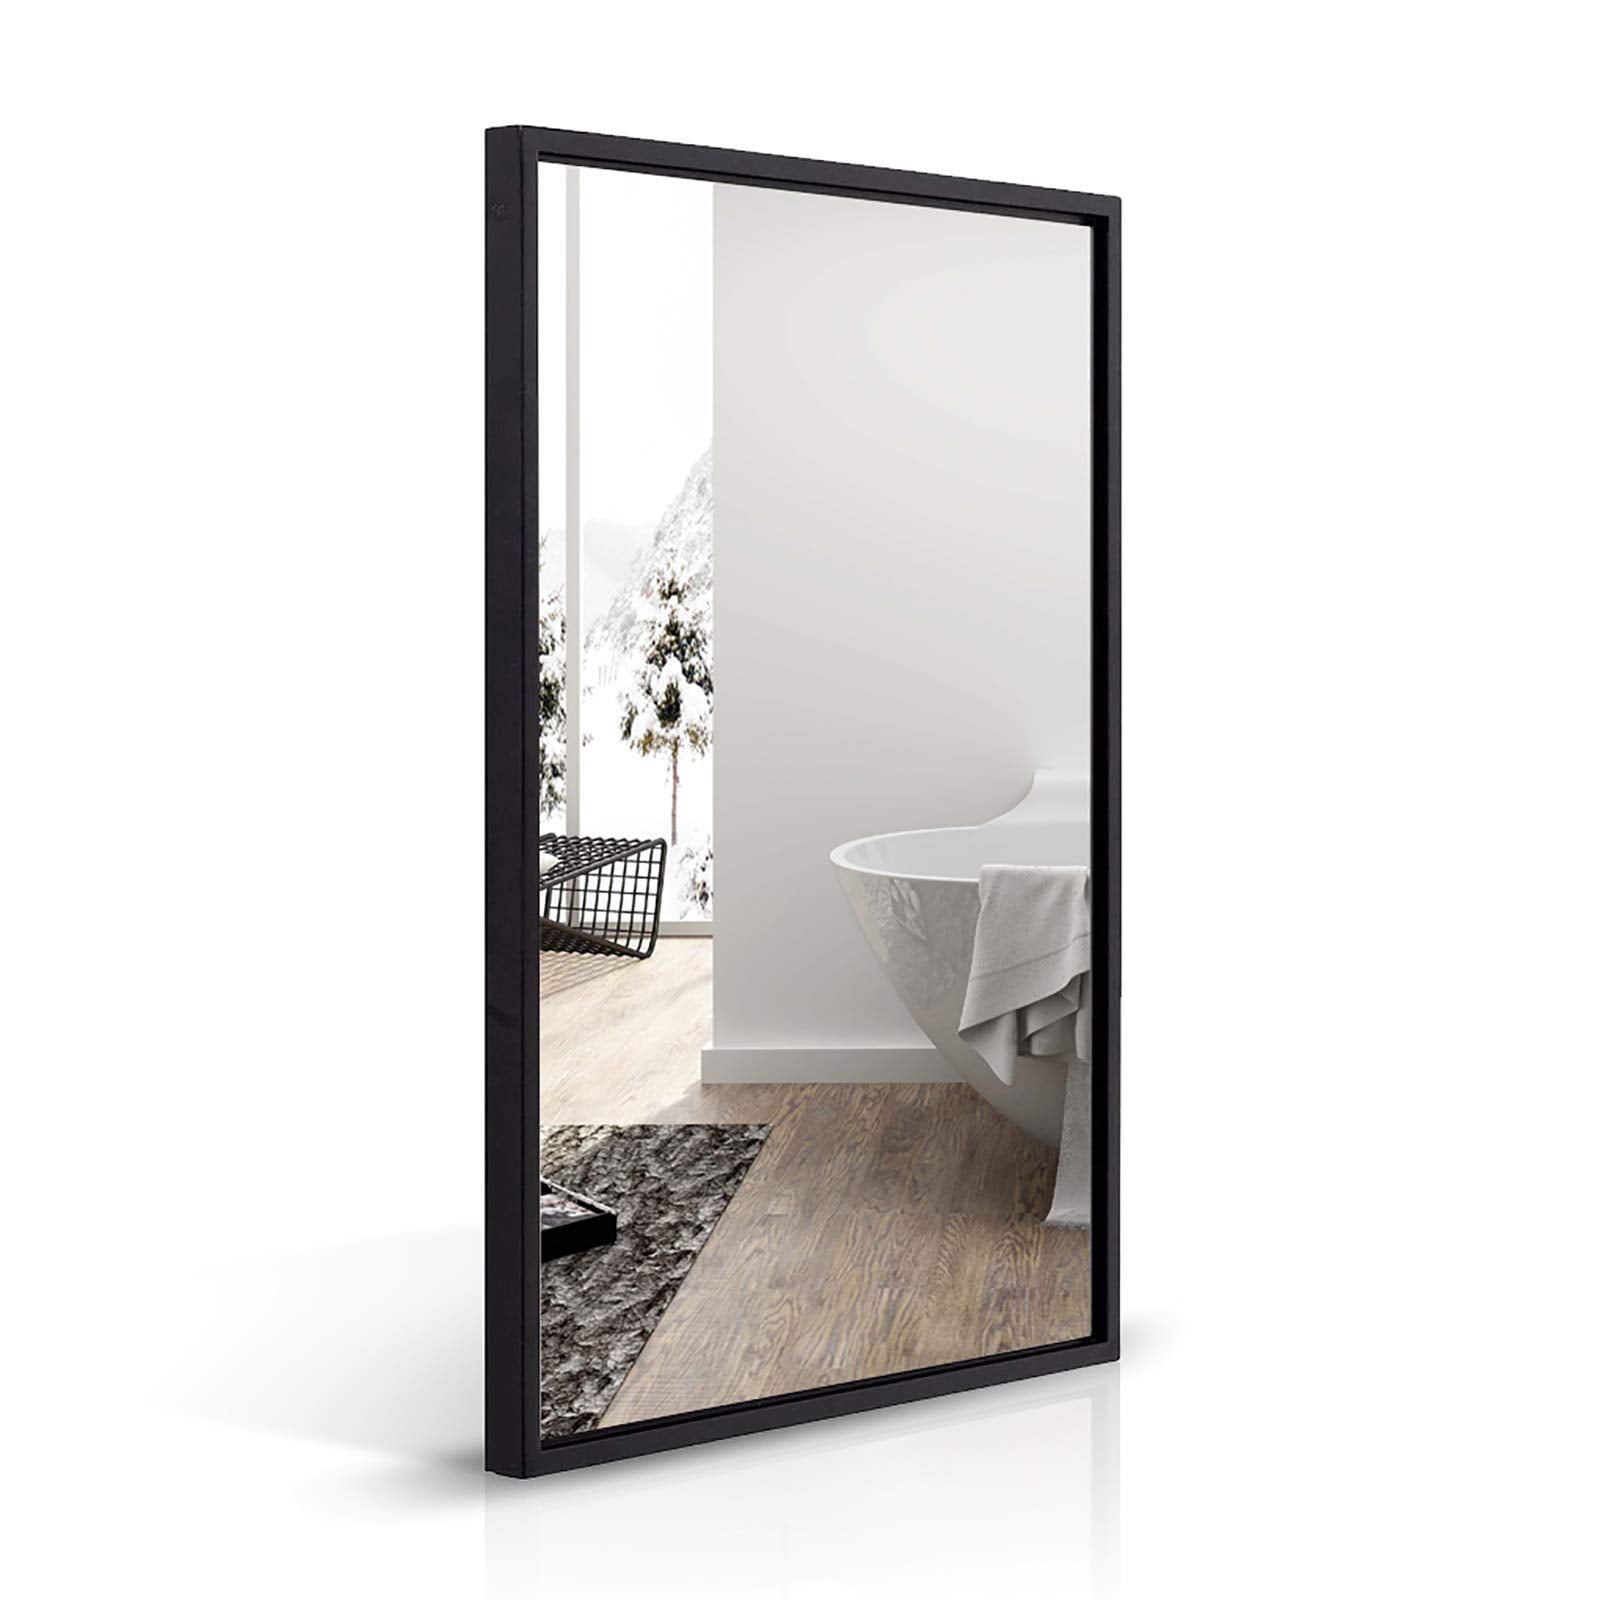 Andy Star Black Bathroom Mirror 24 X36, Modern Matte Black Bathroom Mirror